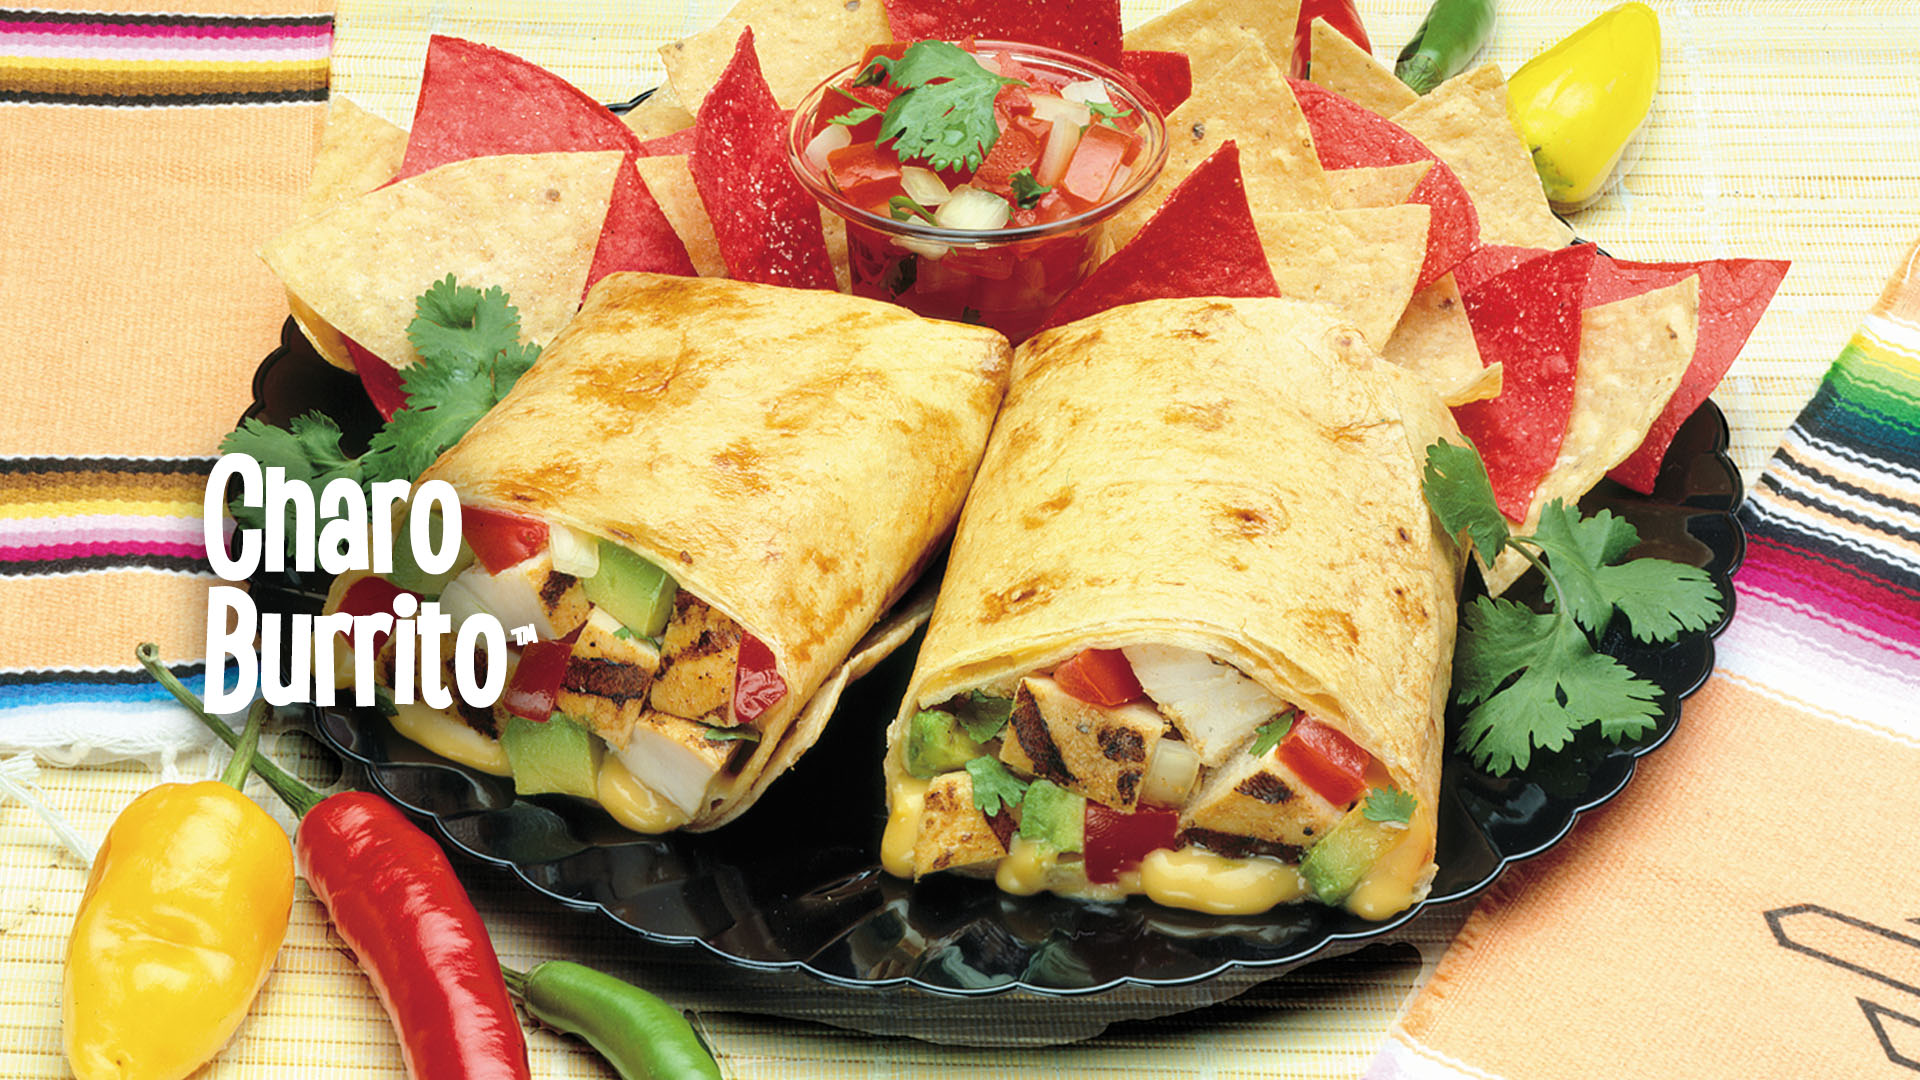 Charo Burrito plated image and text.